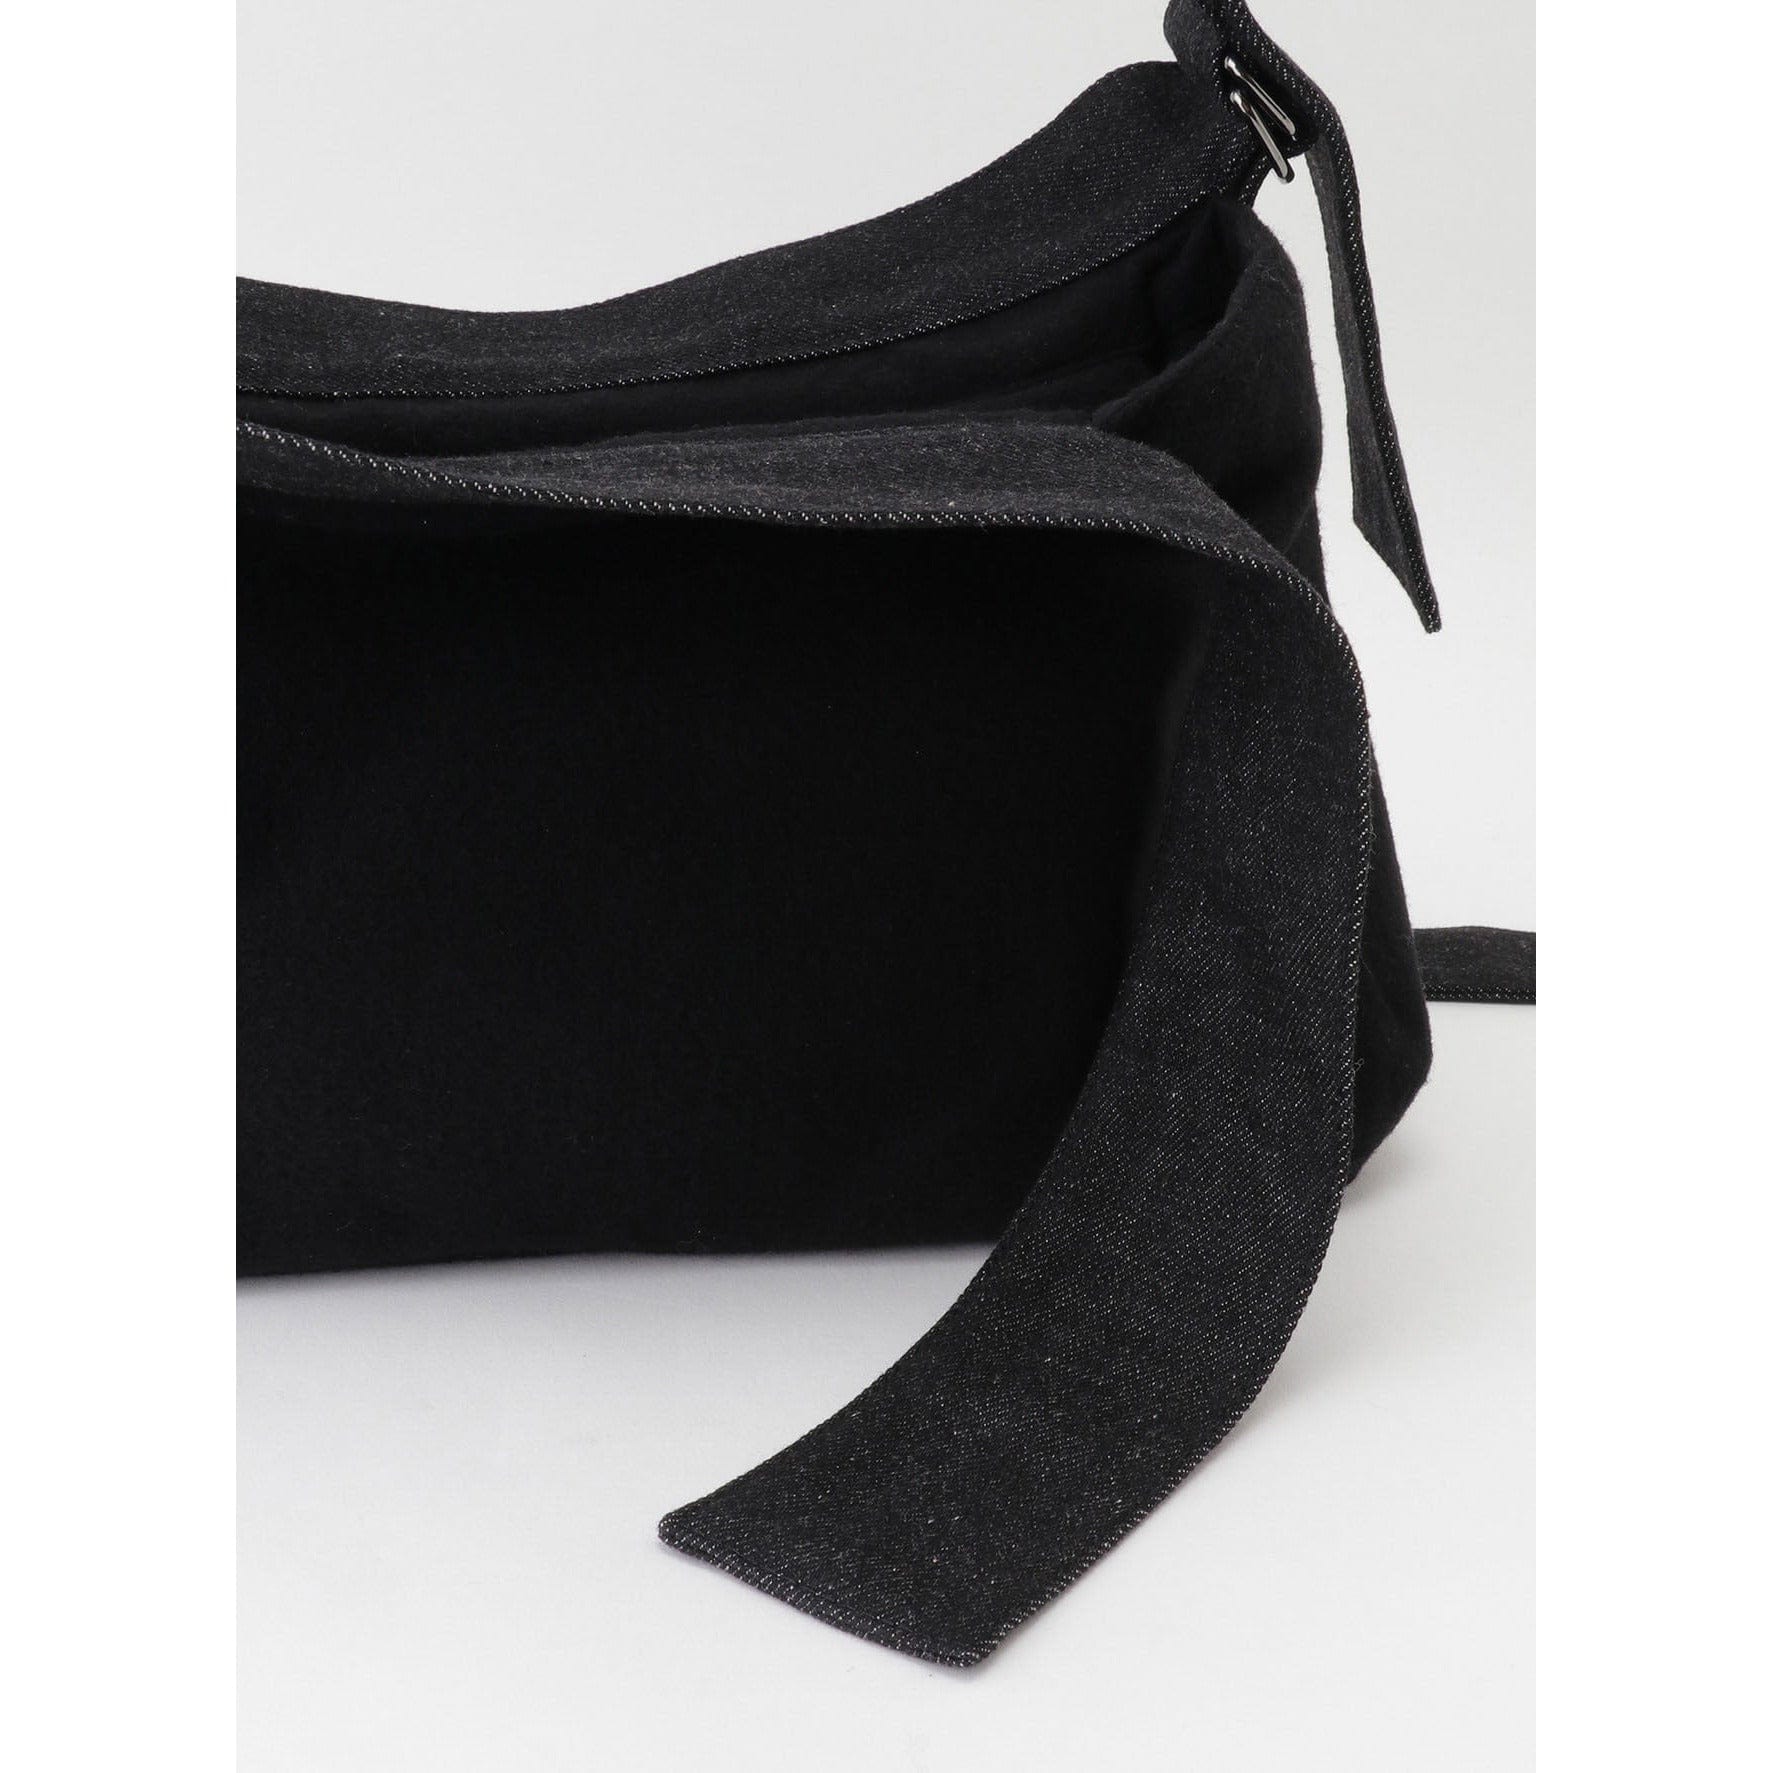 Yohji Yamamoto Handbags Black / 85% Wool and 15% Nylon / 22.5cm x 23cm x 8 cm Yohji Yamamoto Belt Shoulder Bag